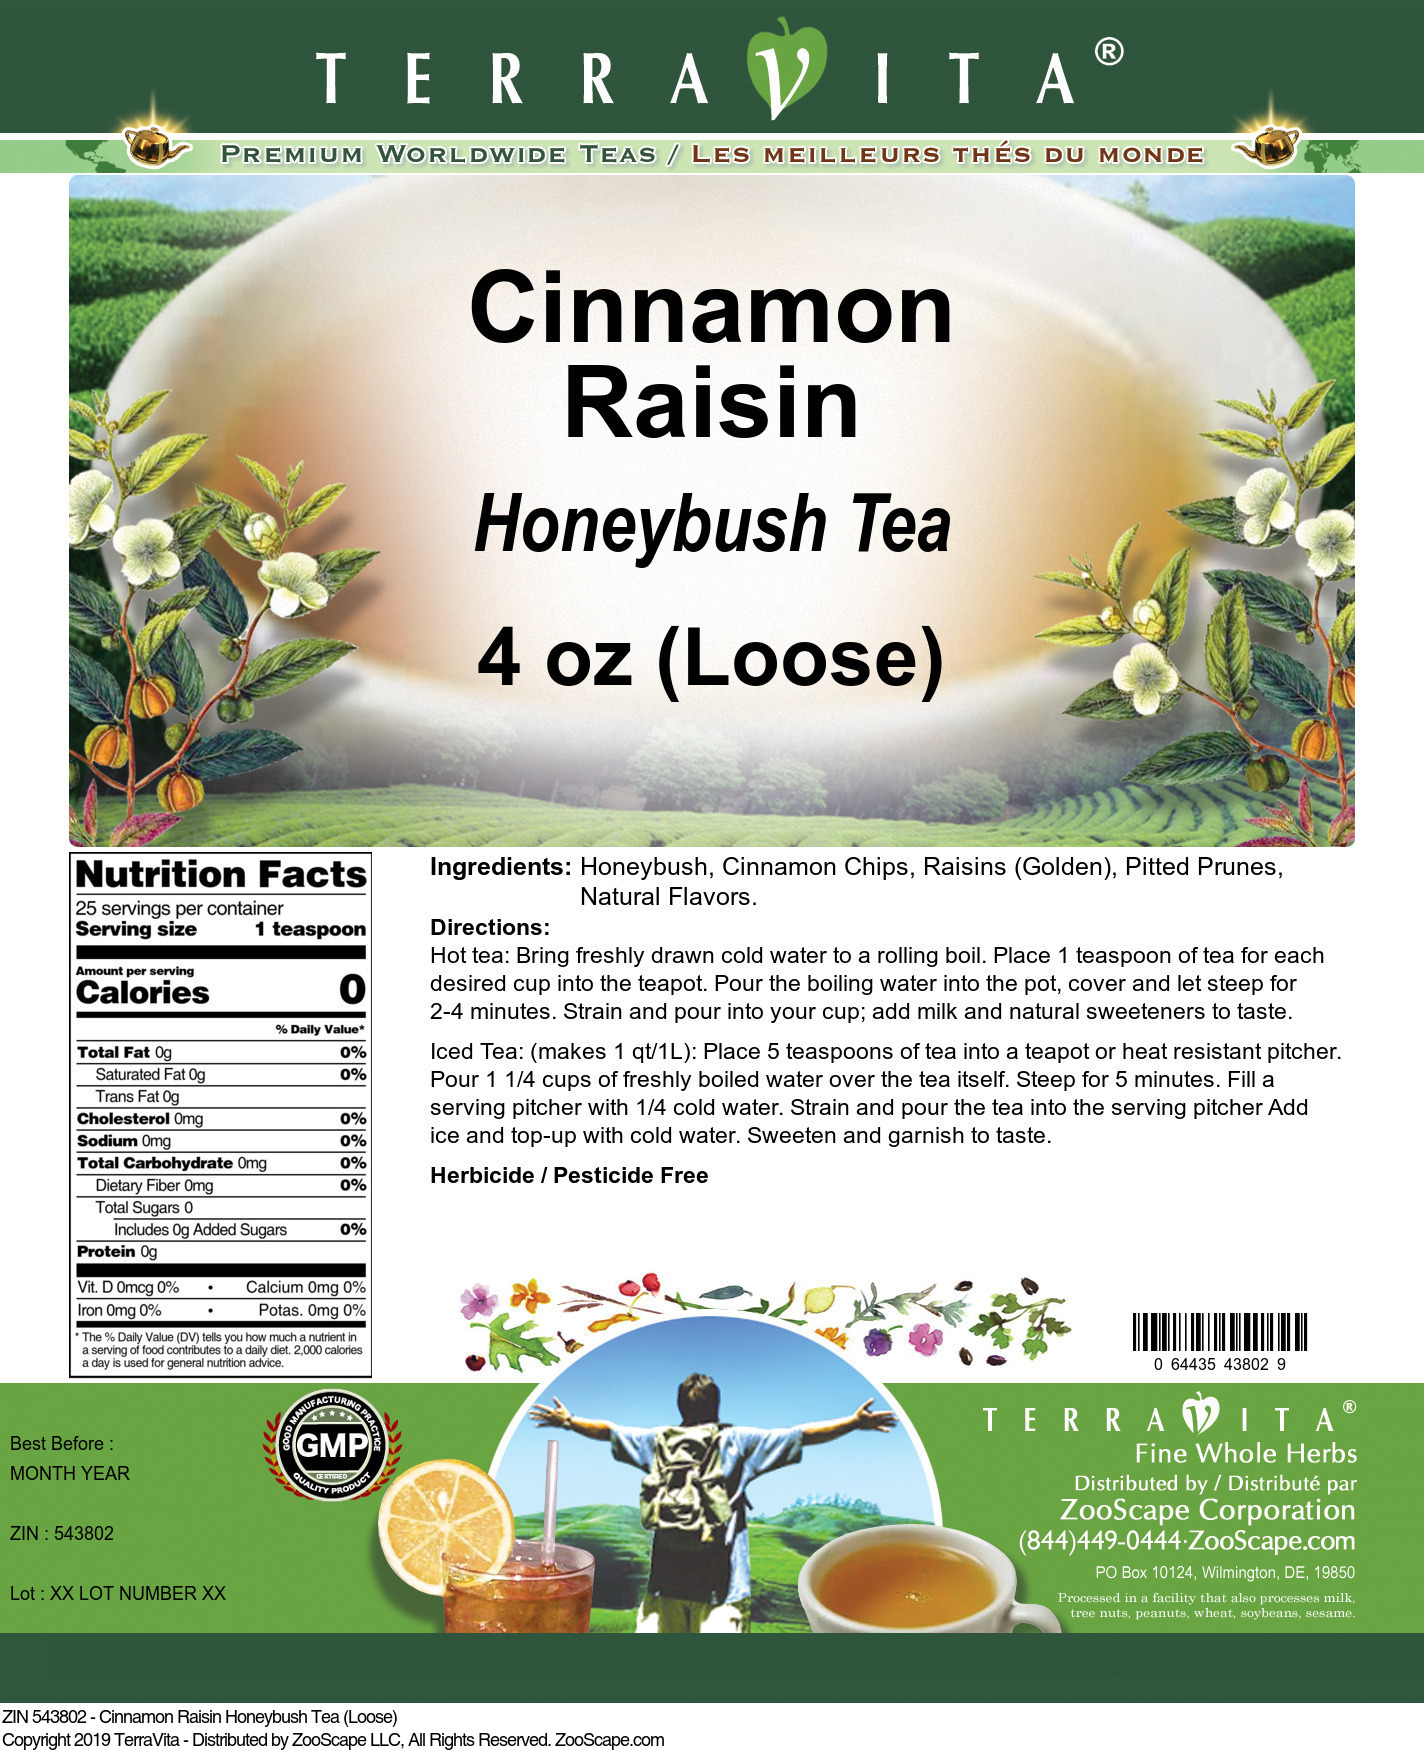 Cinnamon Raisin Honeybush Tea (Loose) - Label